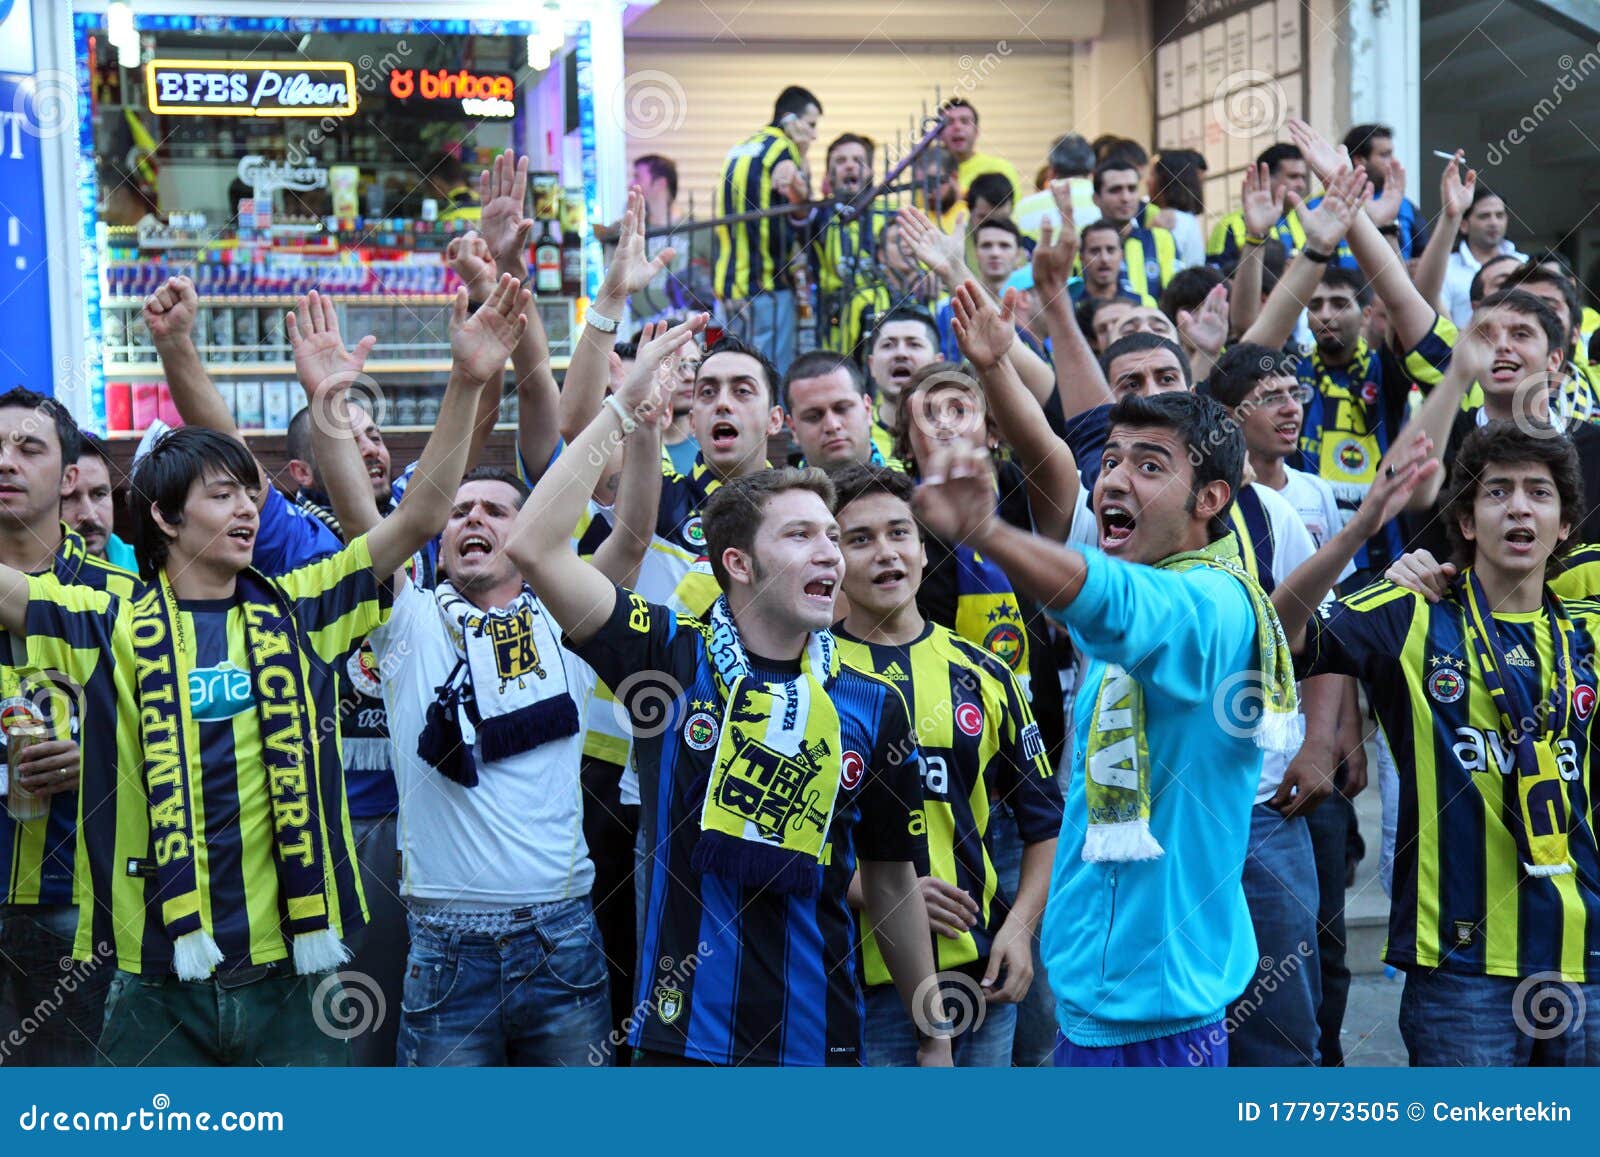 The Rivalry Between Adana Demirspor and Fenerbahçe